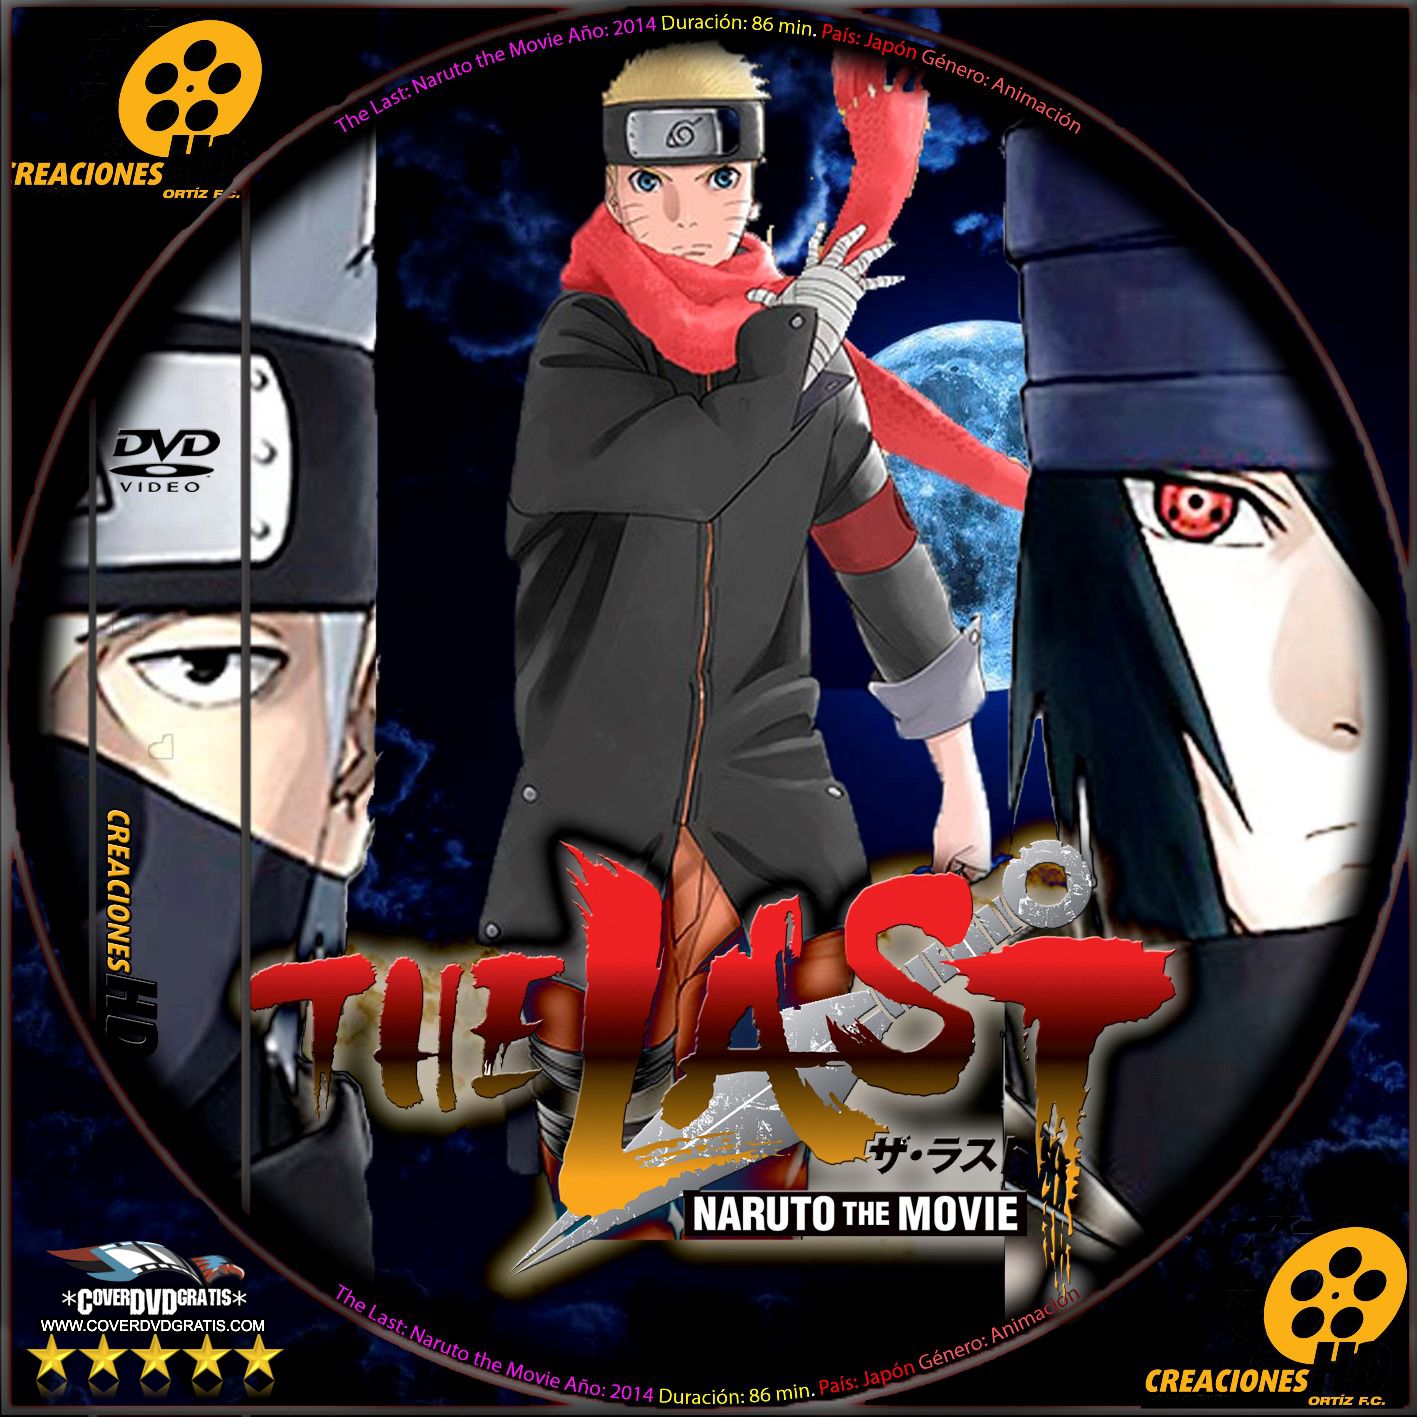 2014 The Last: Naruto The Movie